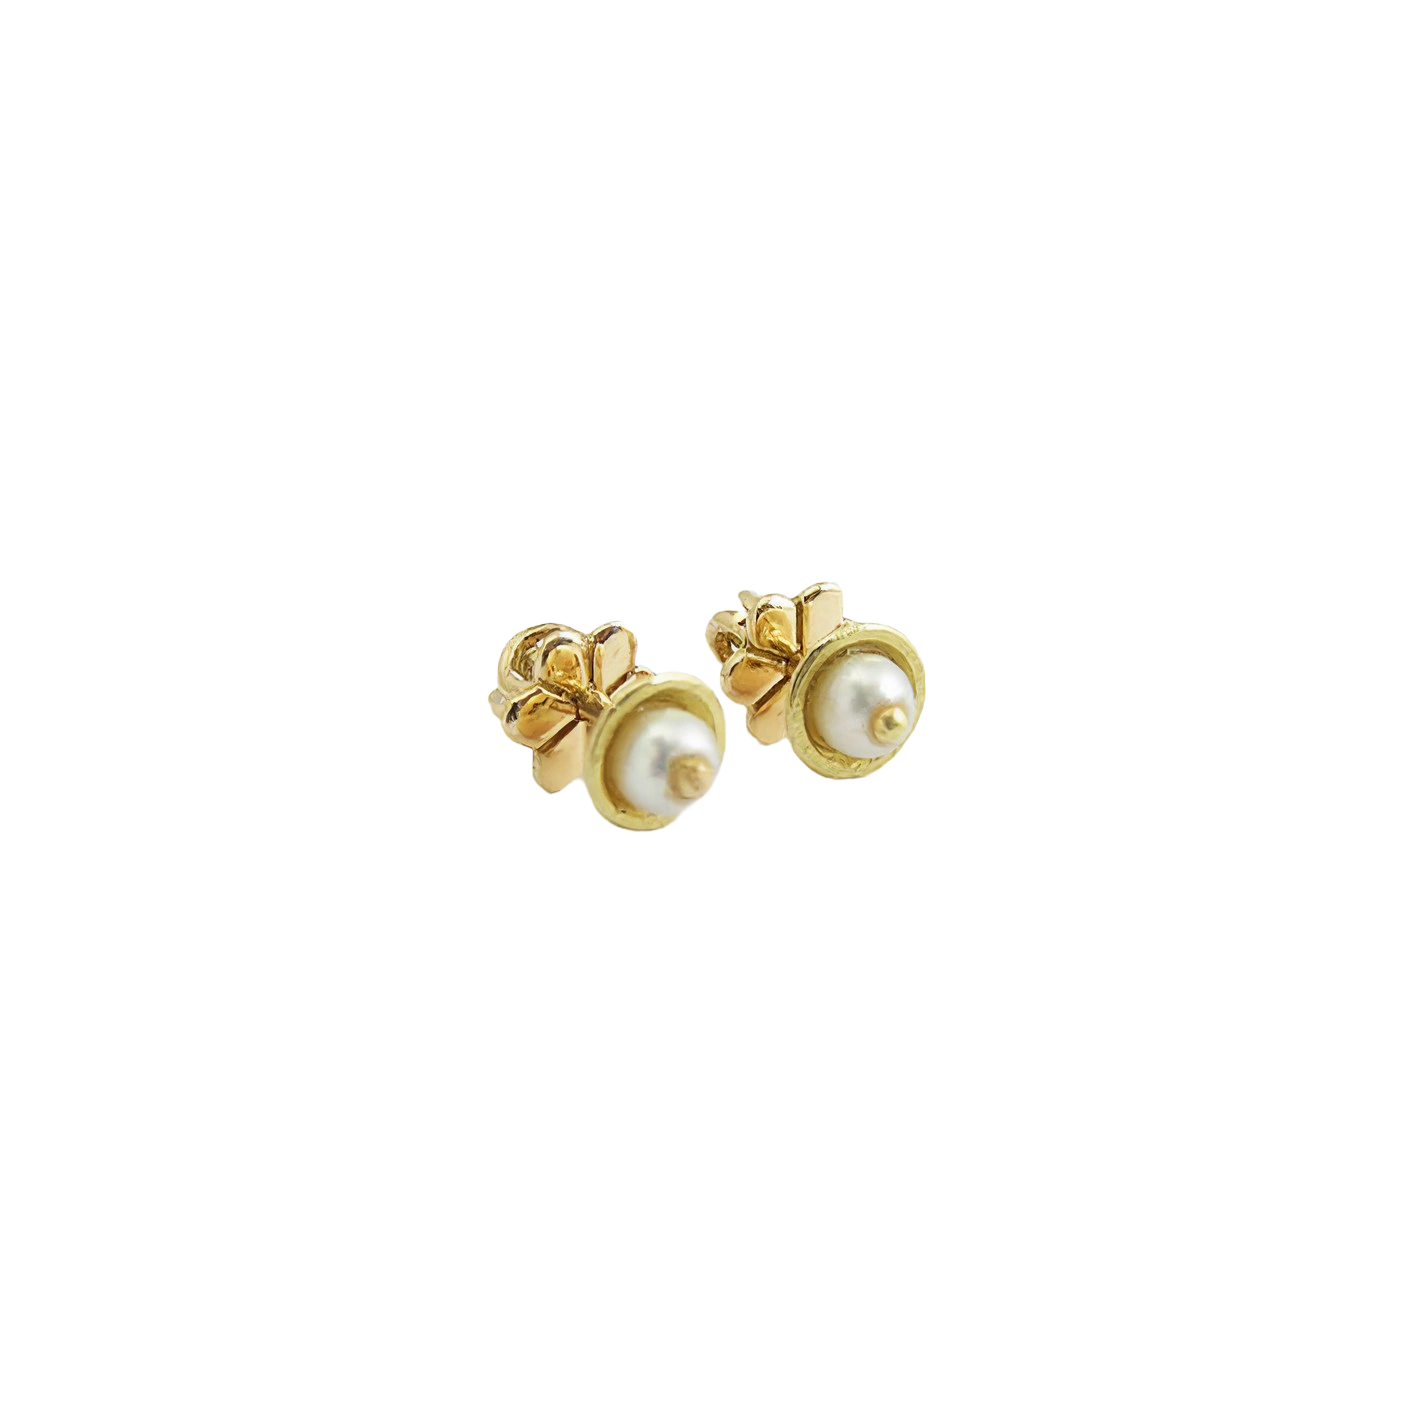 The Babyrasa Sarita Gold and Pearl Ear Studs by Rasvihar